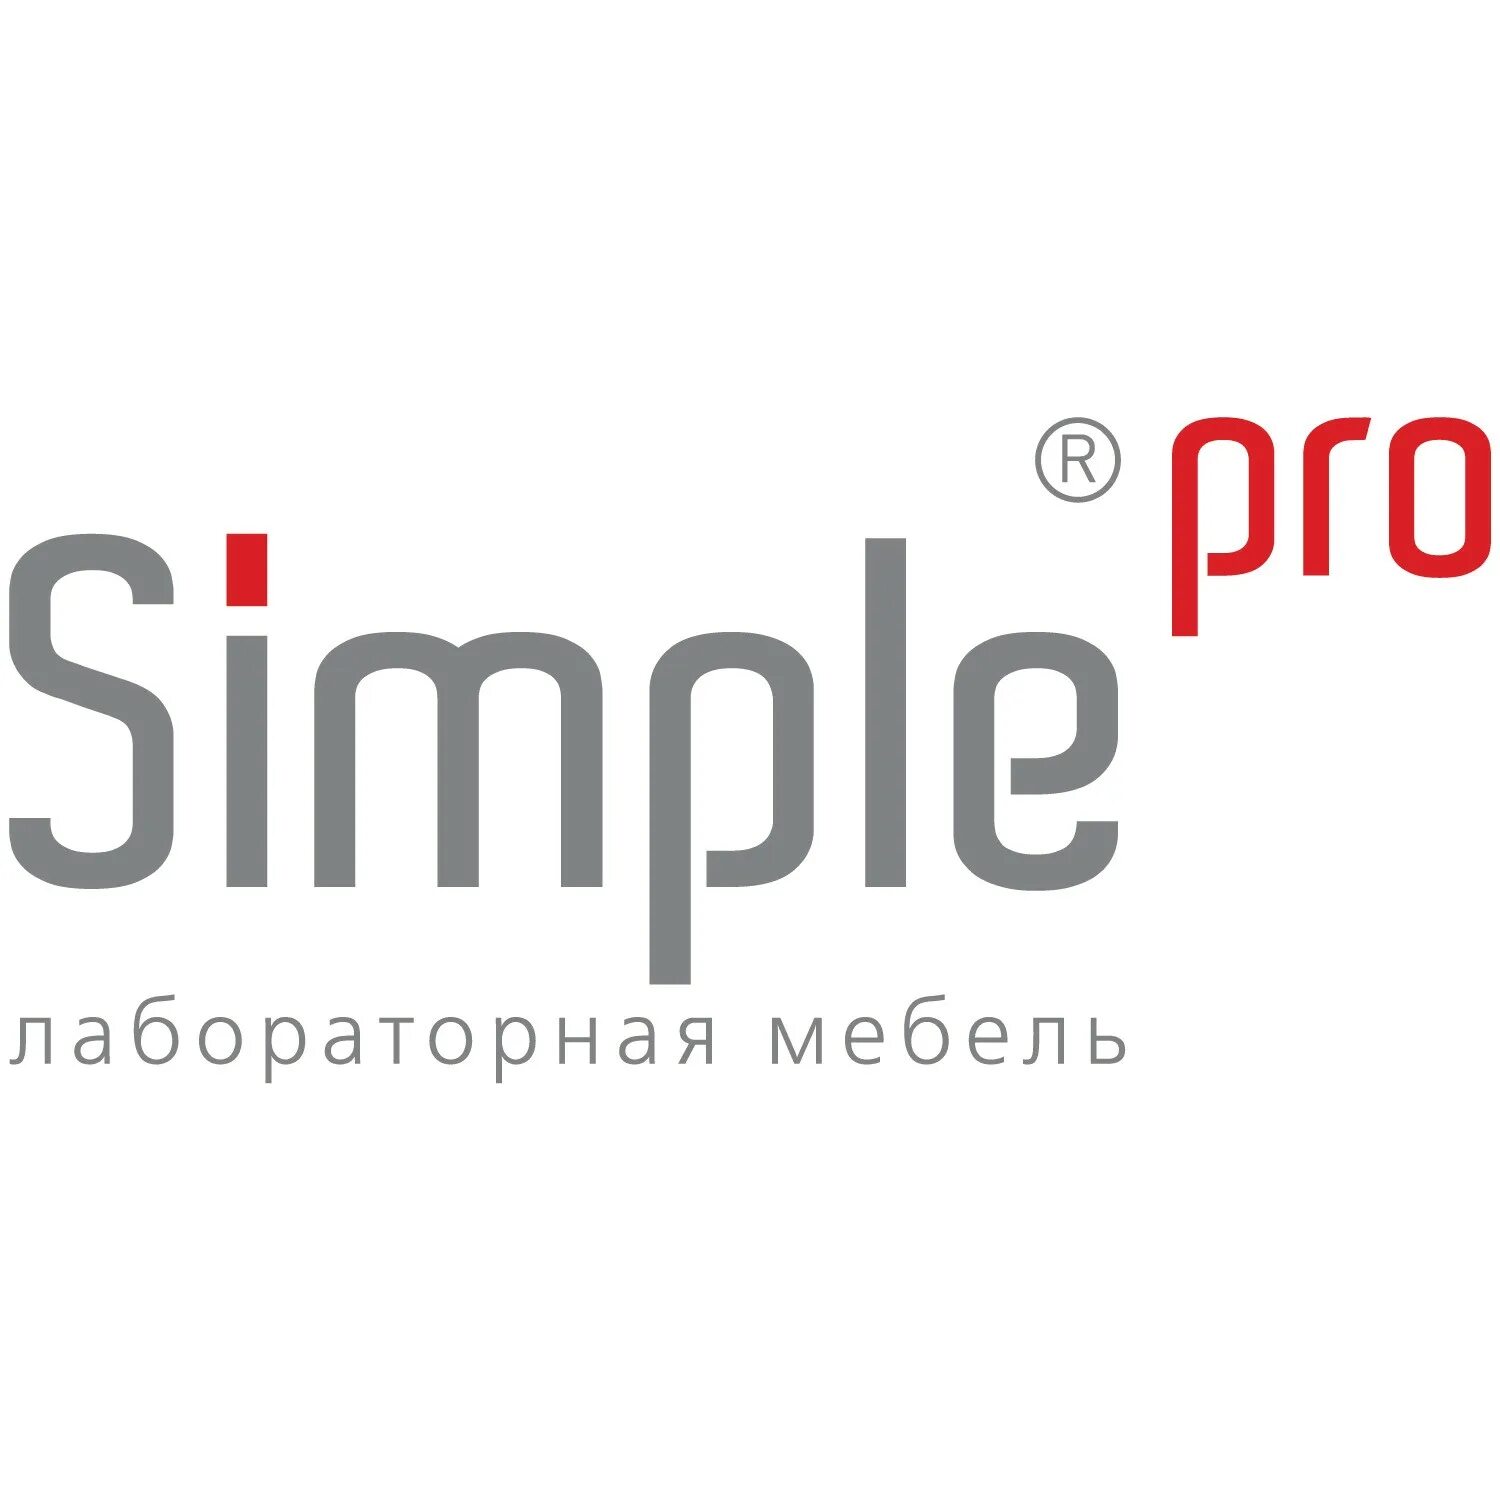 Мебель лабораторная SIMPLEPRO. Simple Pro. Спецбалт мебель. Simple компания.